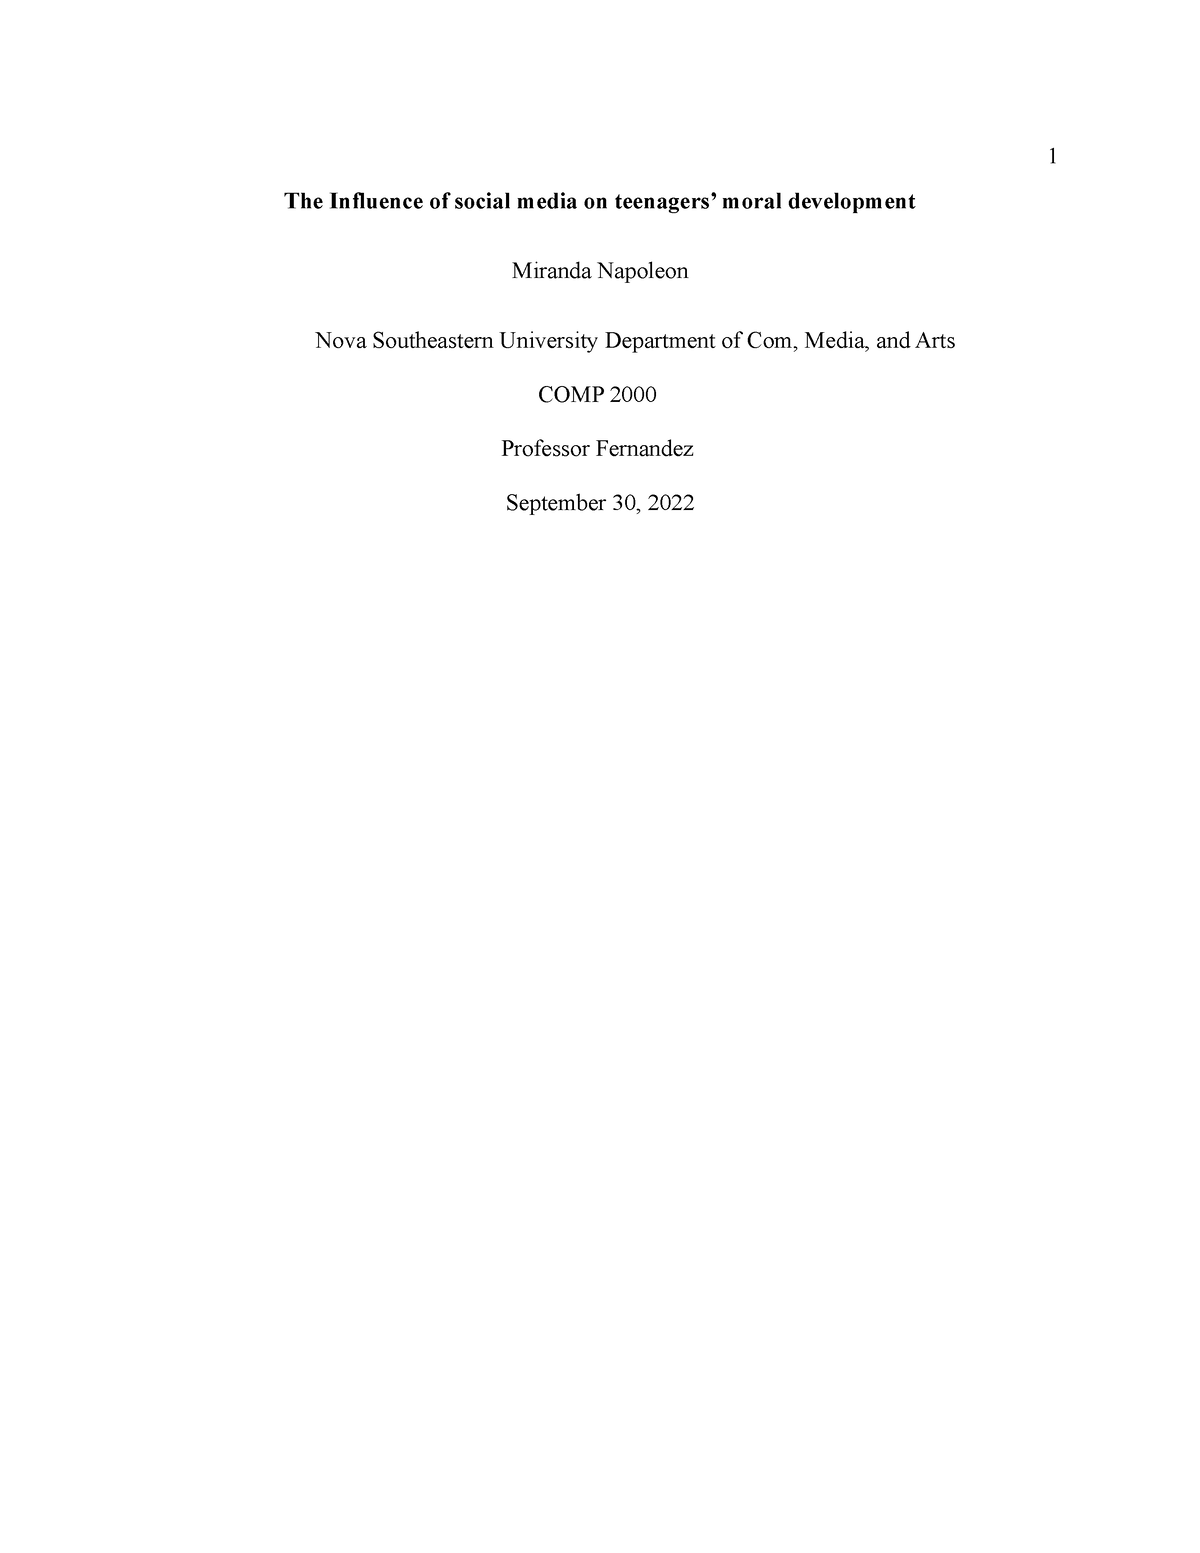 Observation Report Miranda Napoleon - The Influence of social media on ...